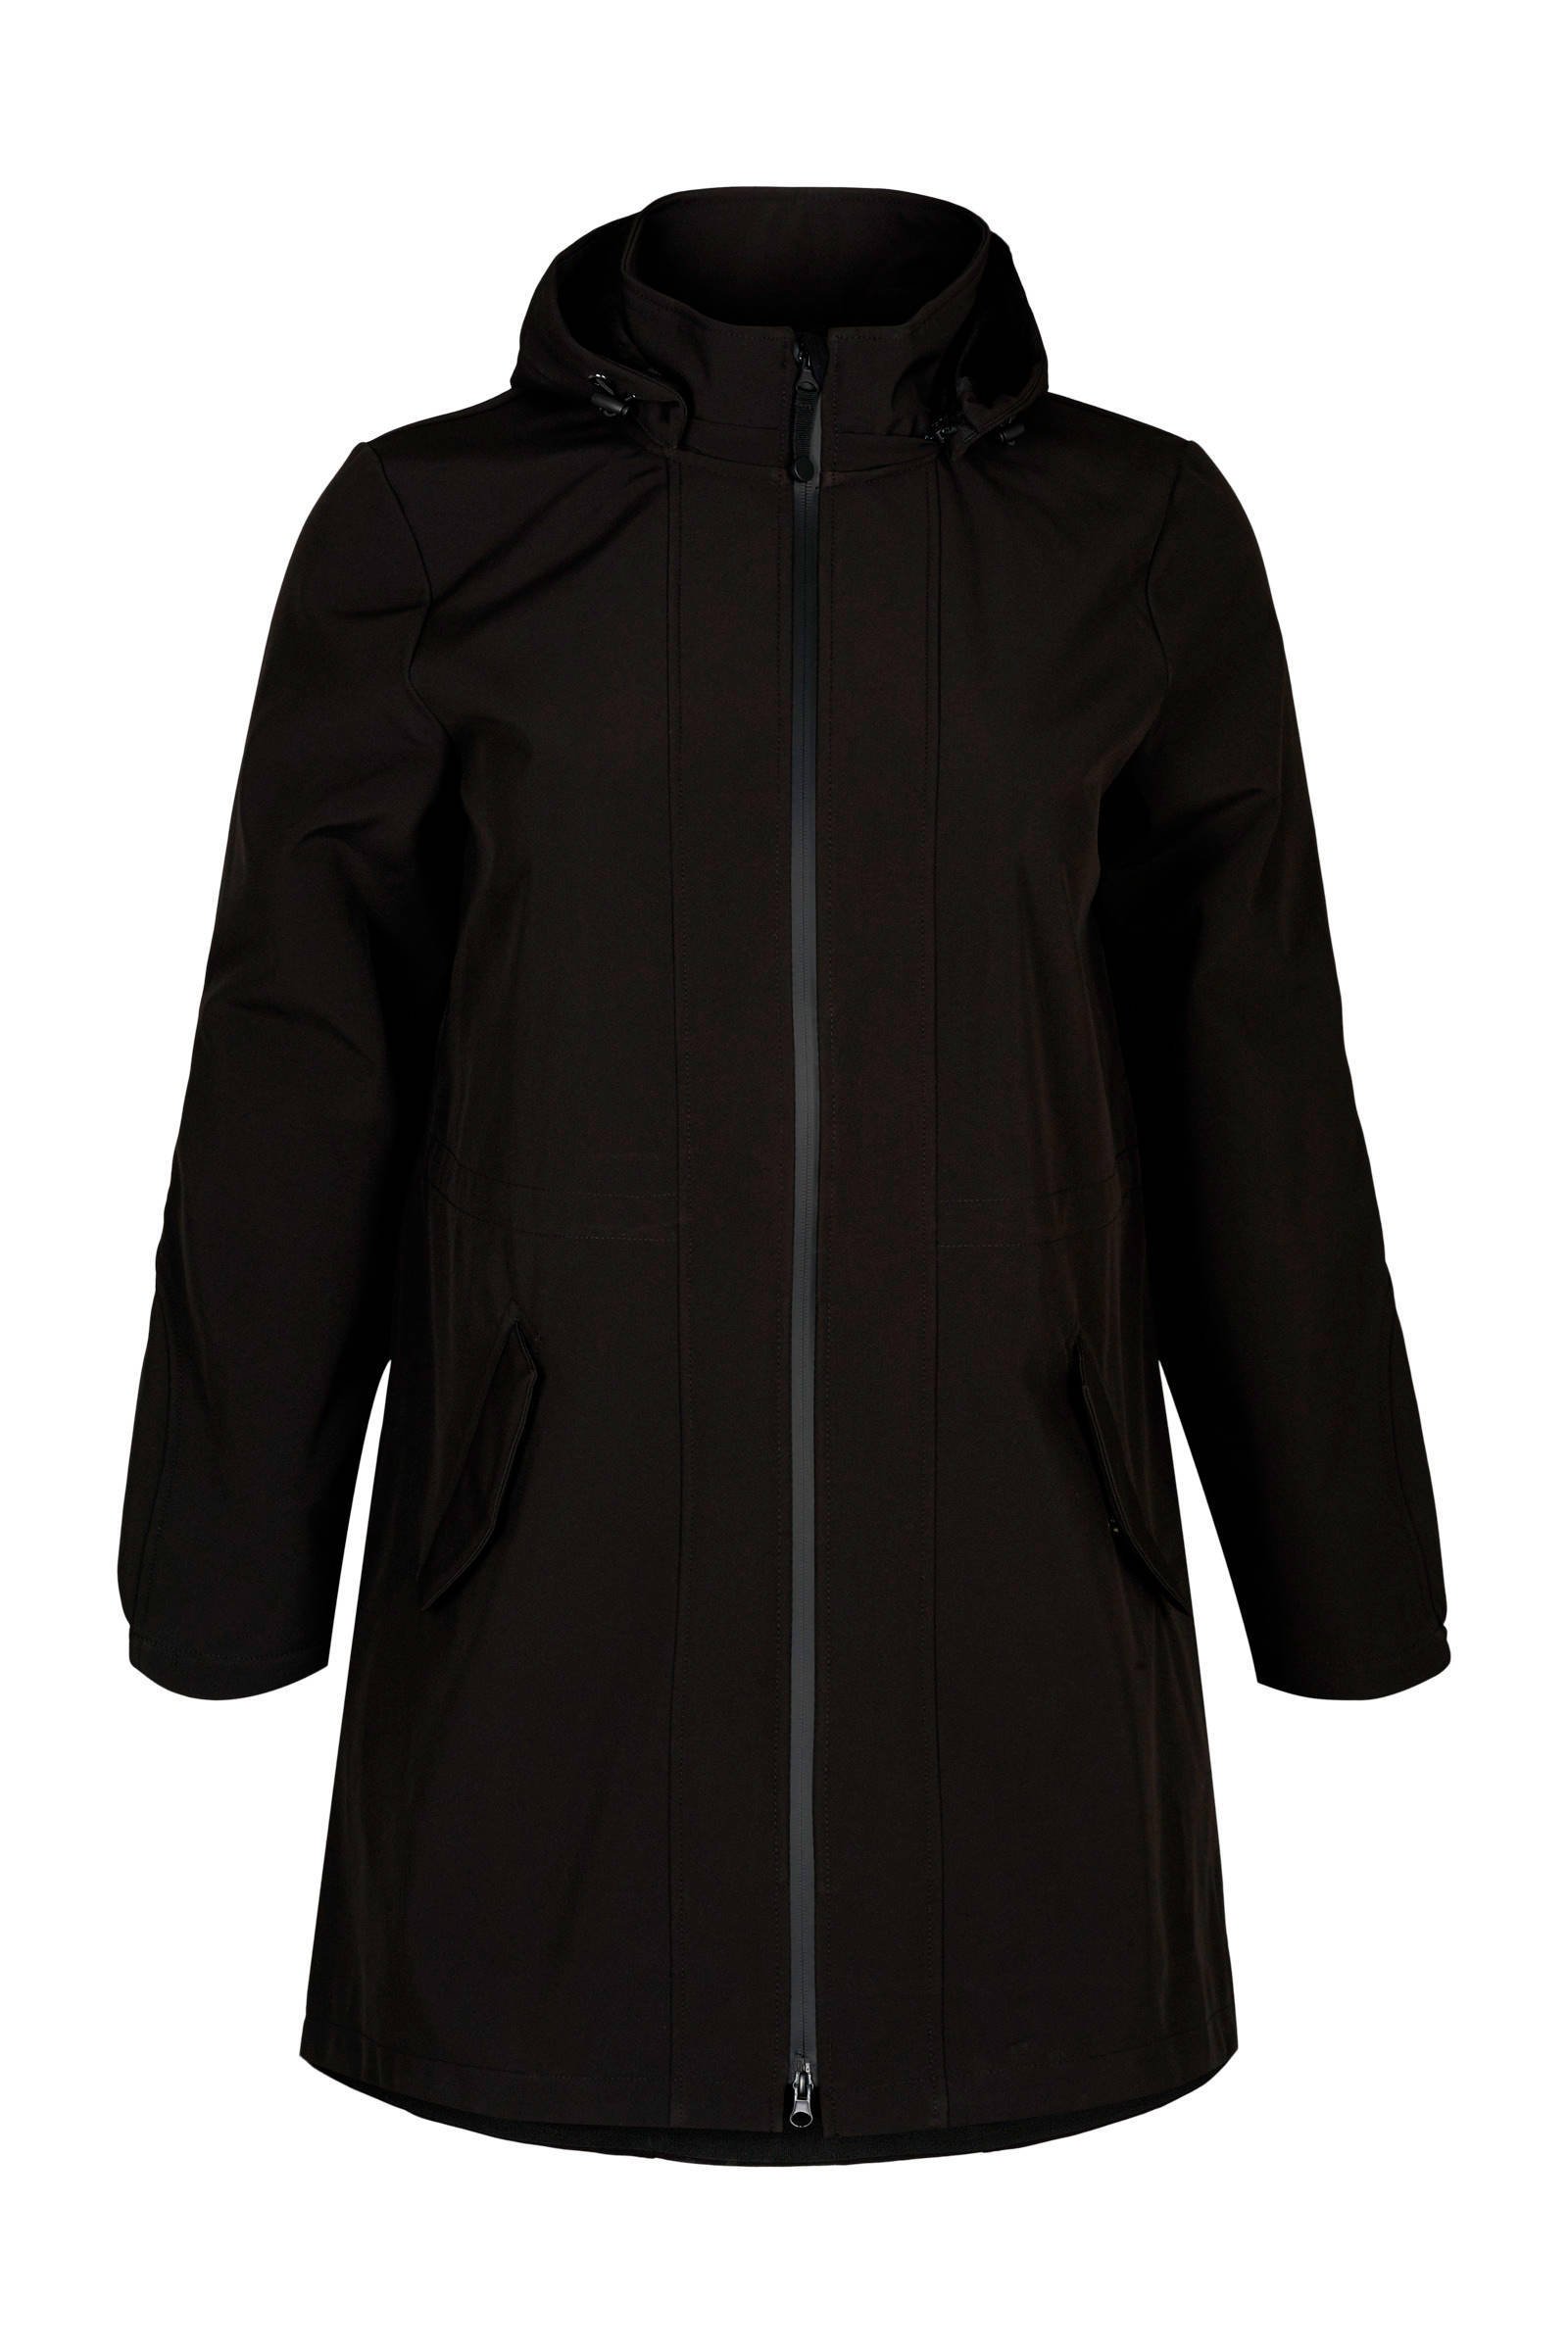 Zizzi waterafstotende softshell jas zwart online kopen